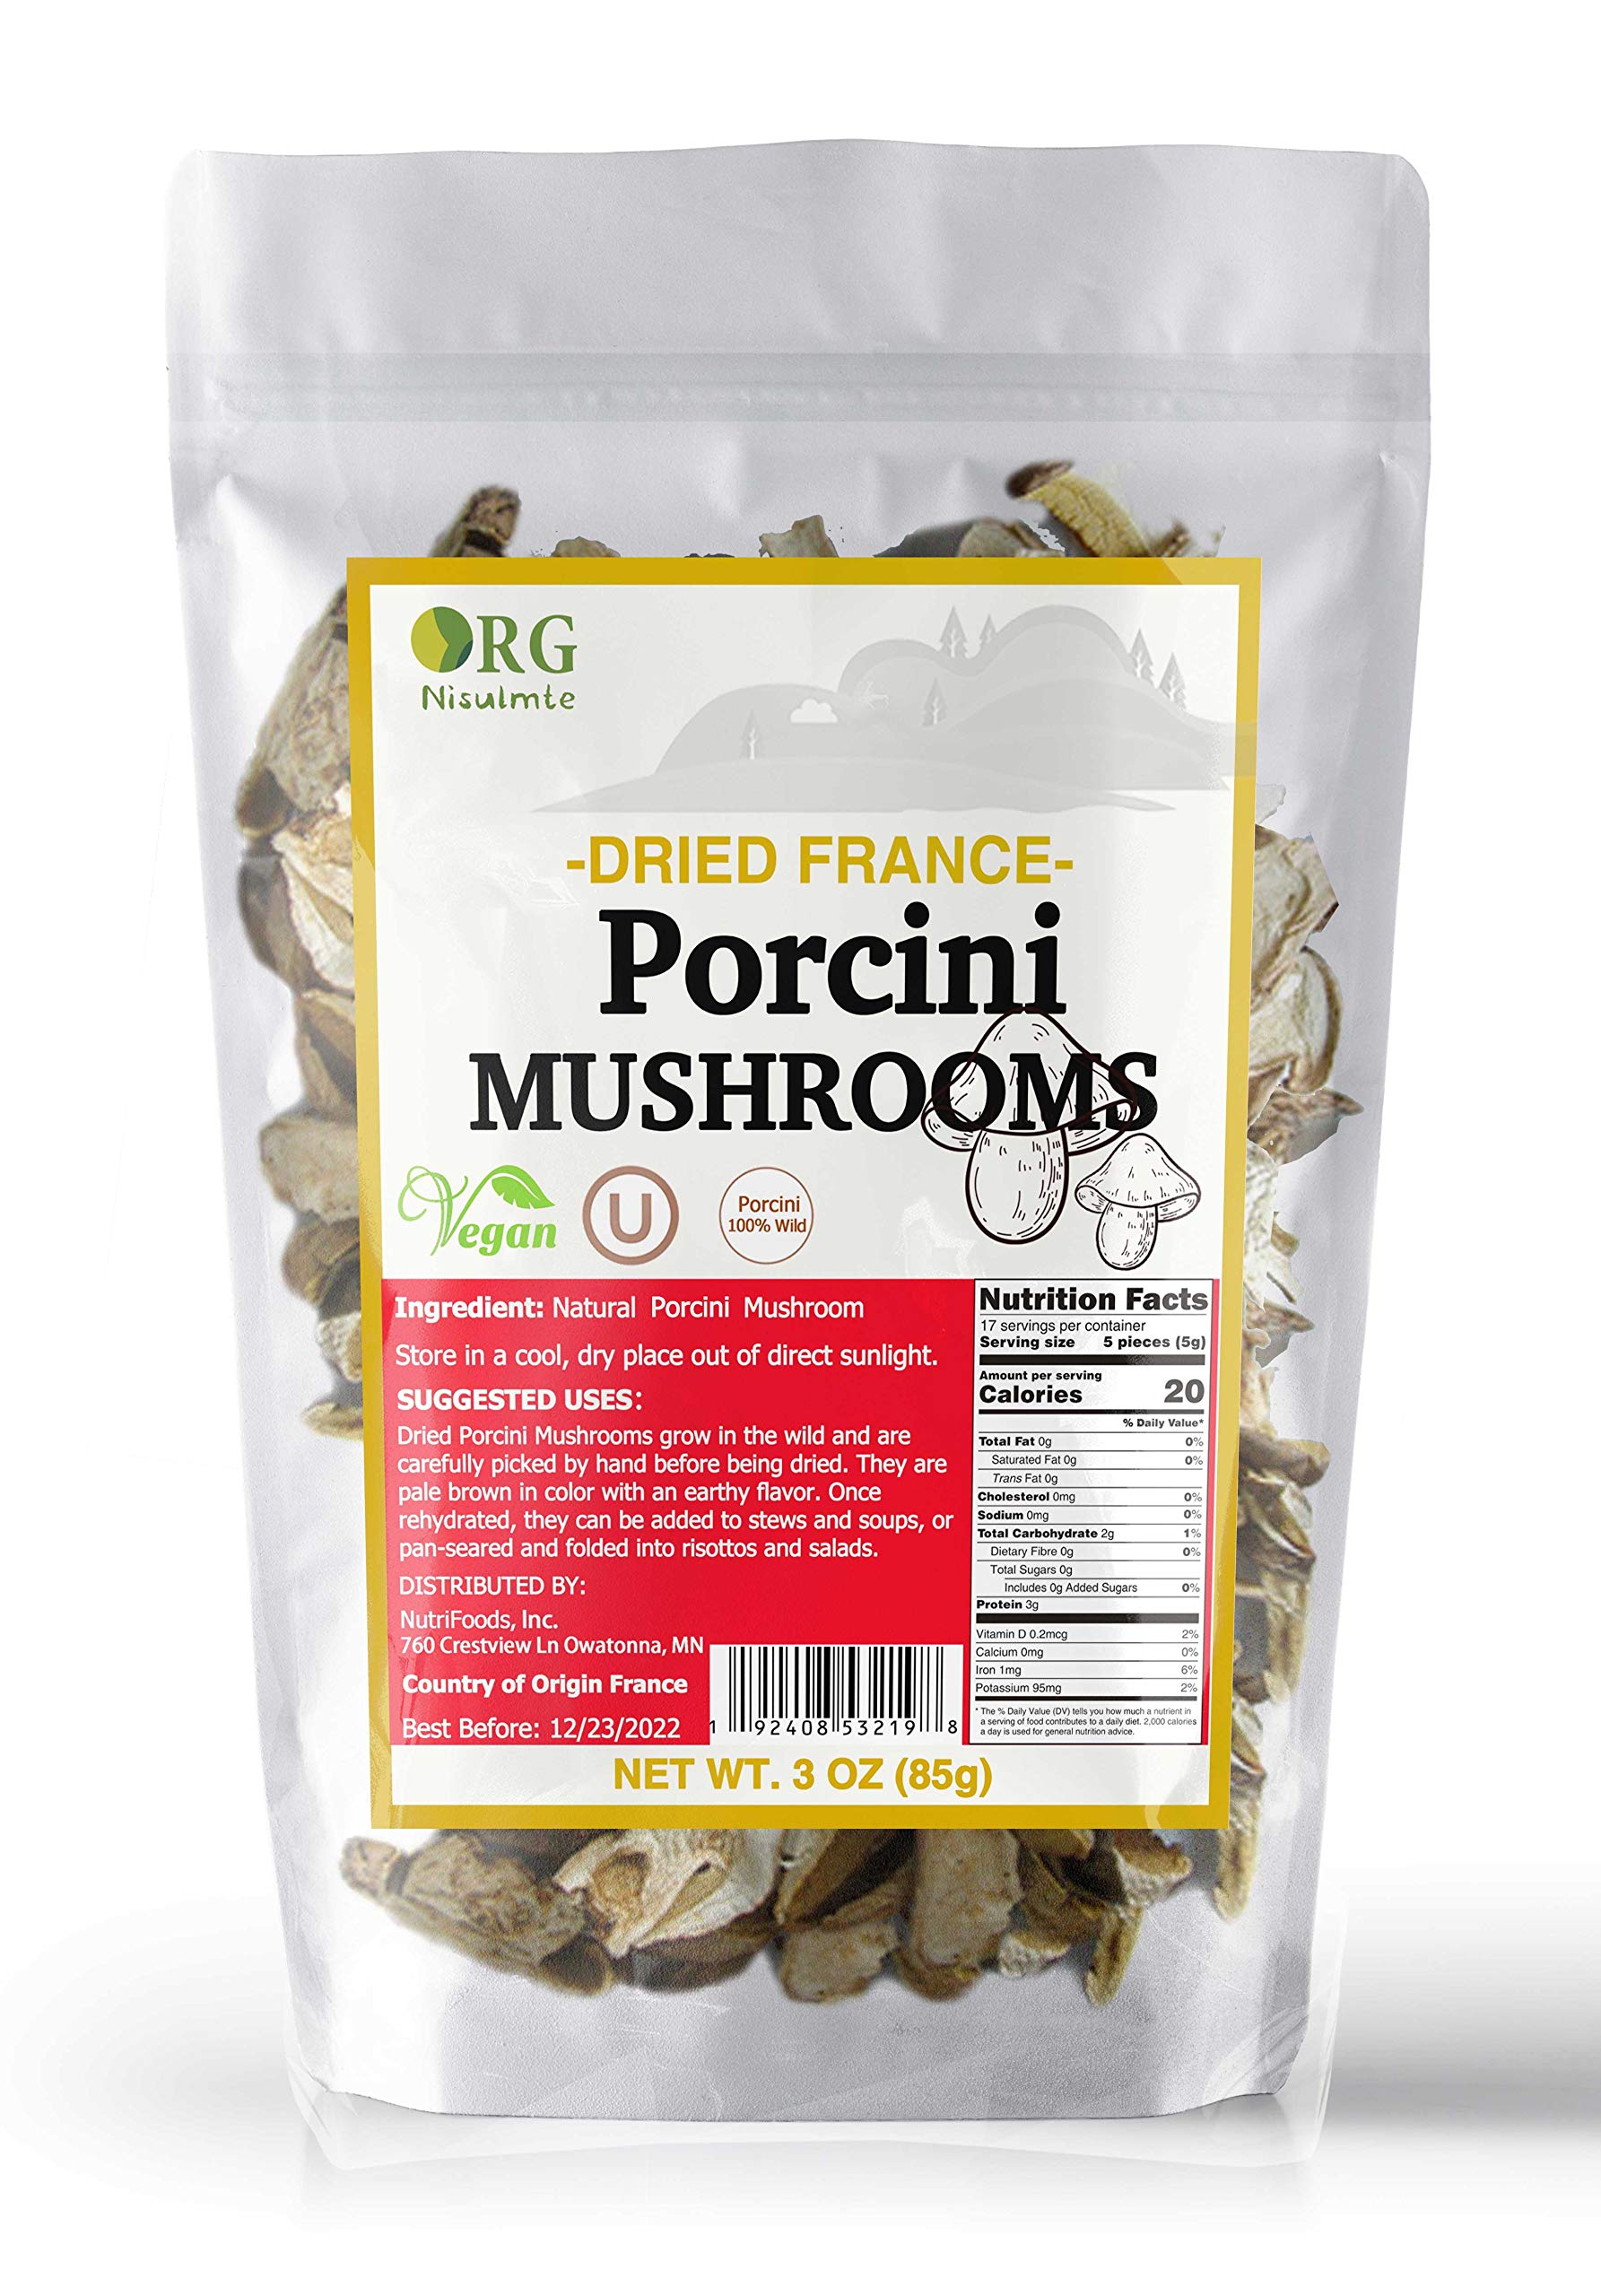 Orgnisulmte Dried Porcini Mushrooms